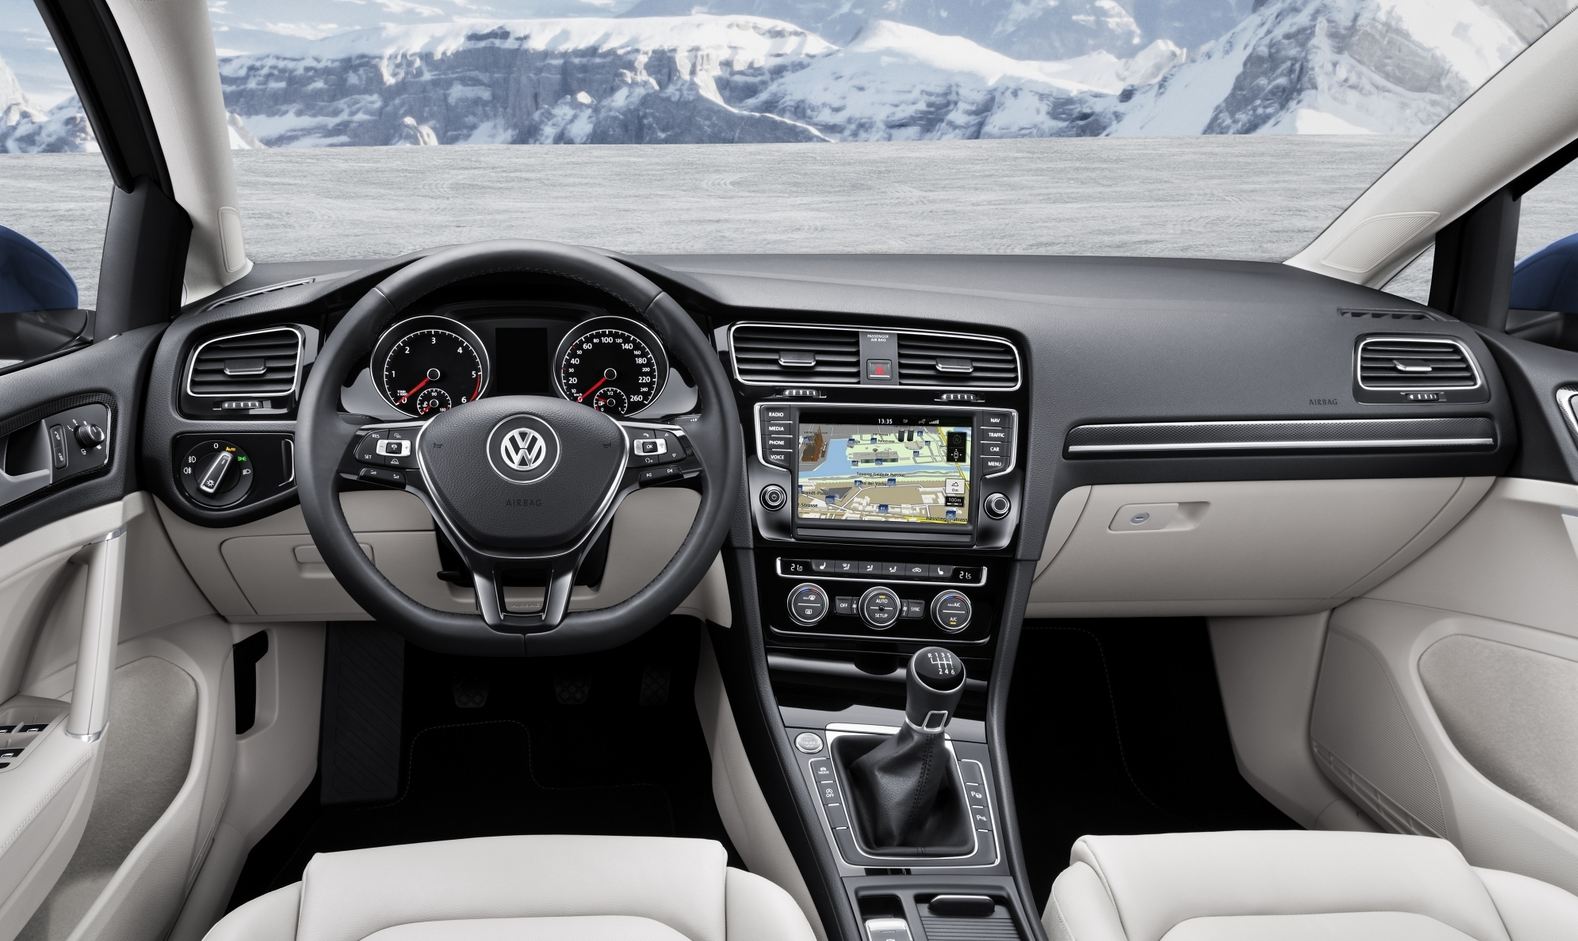 Volkswagen Golf SW Interior